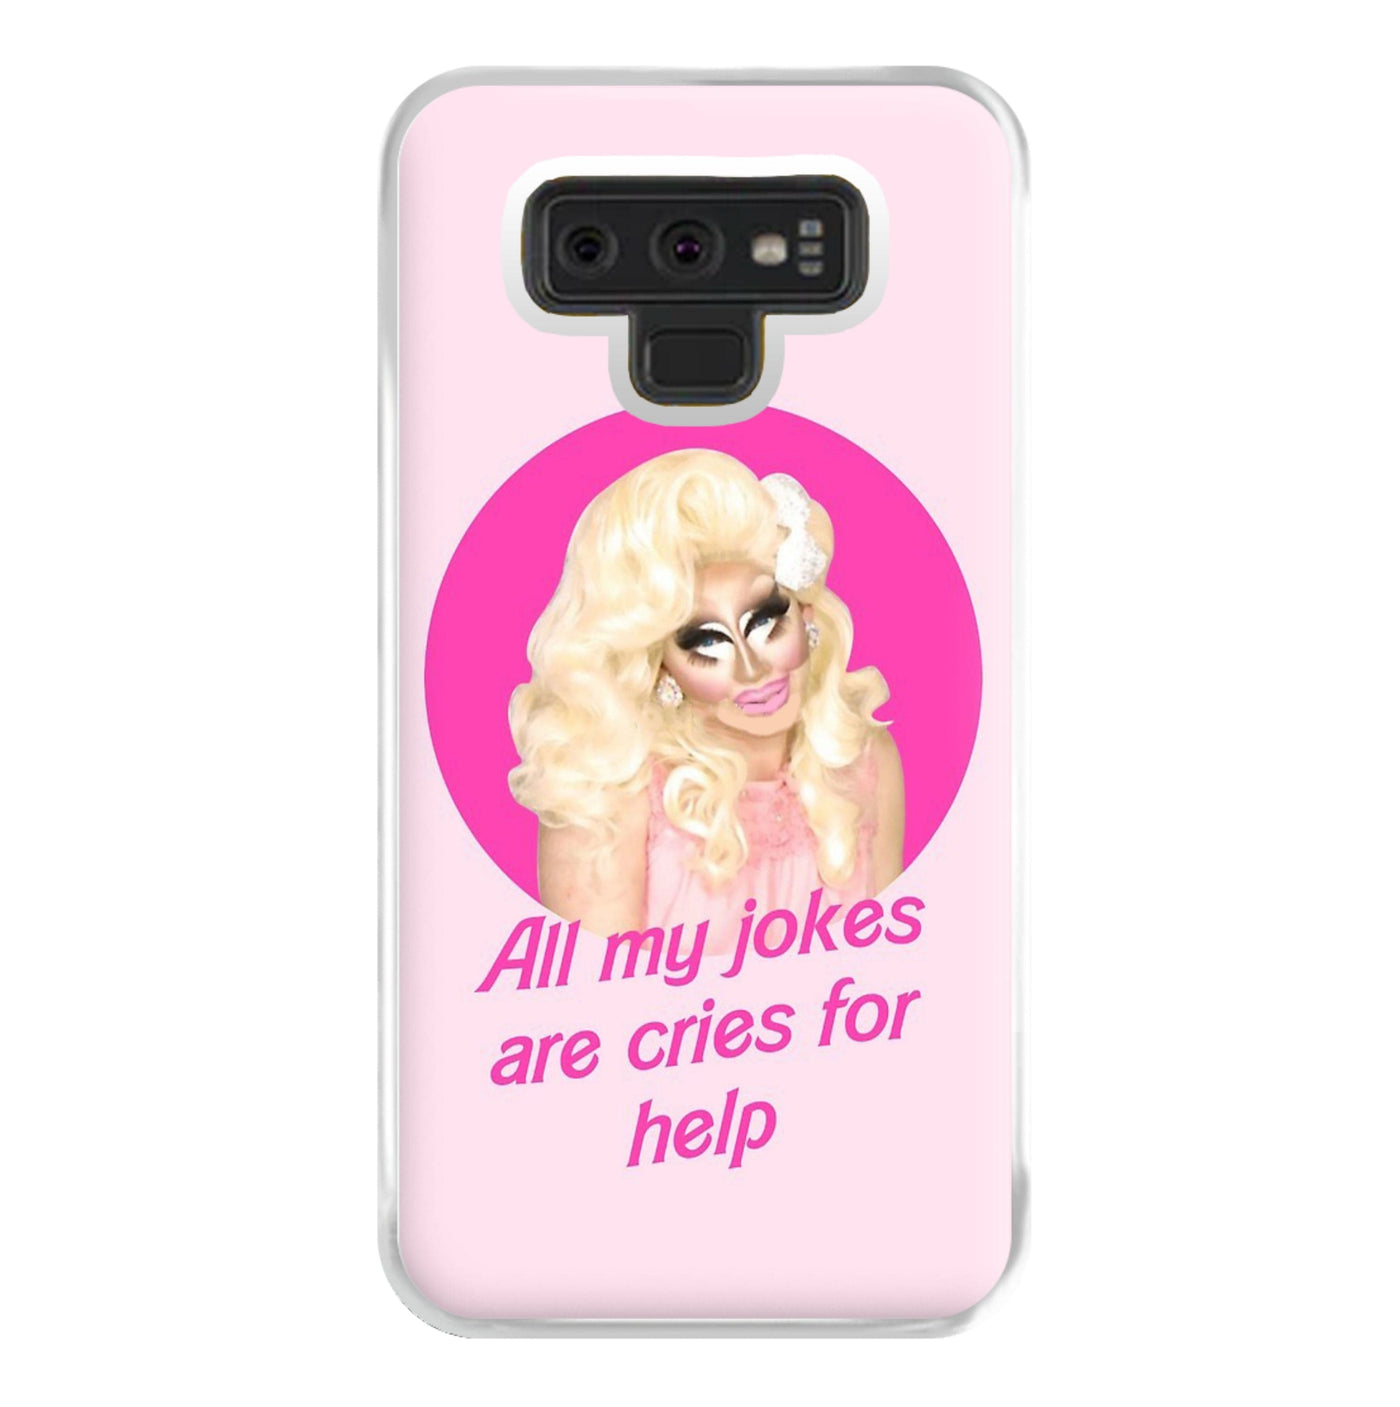 Trixie Mattel Jokes - RuPaul's Drag Race Phone Case